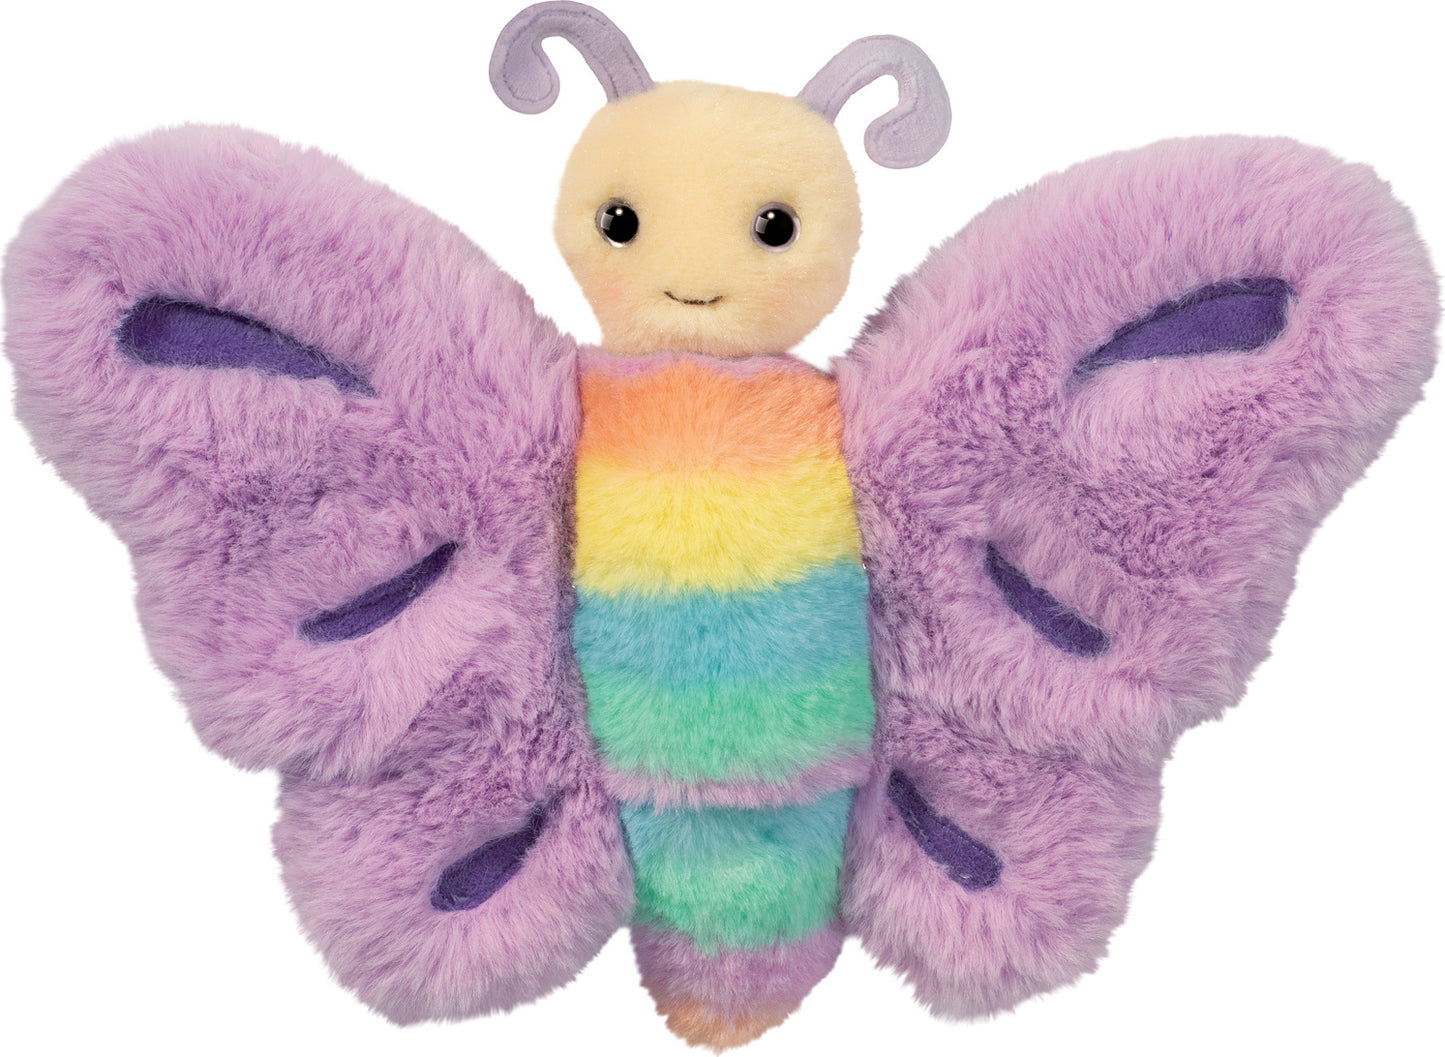 Annabel Butterfly Puppet